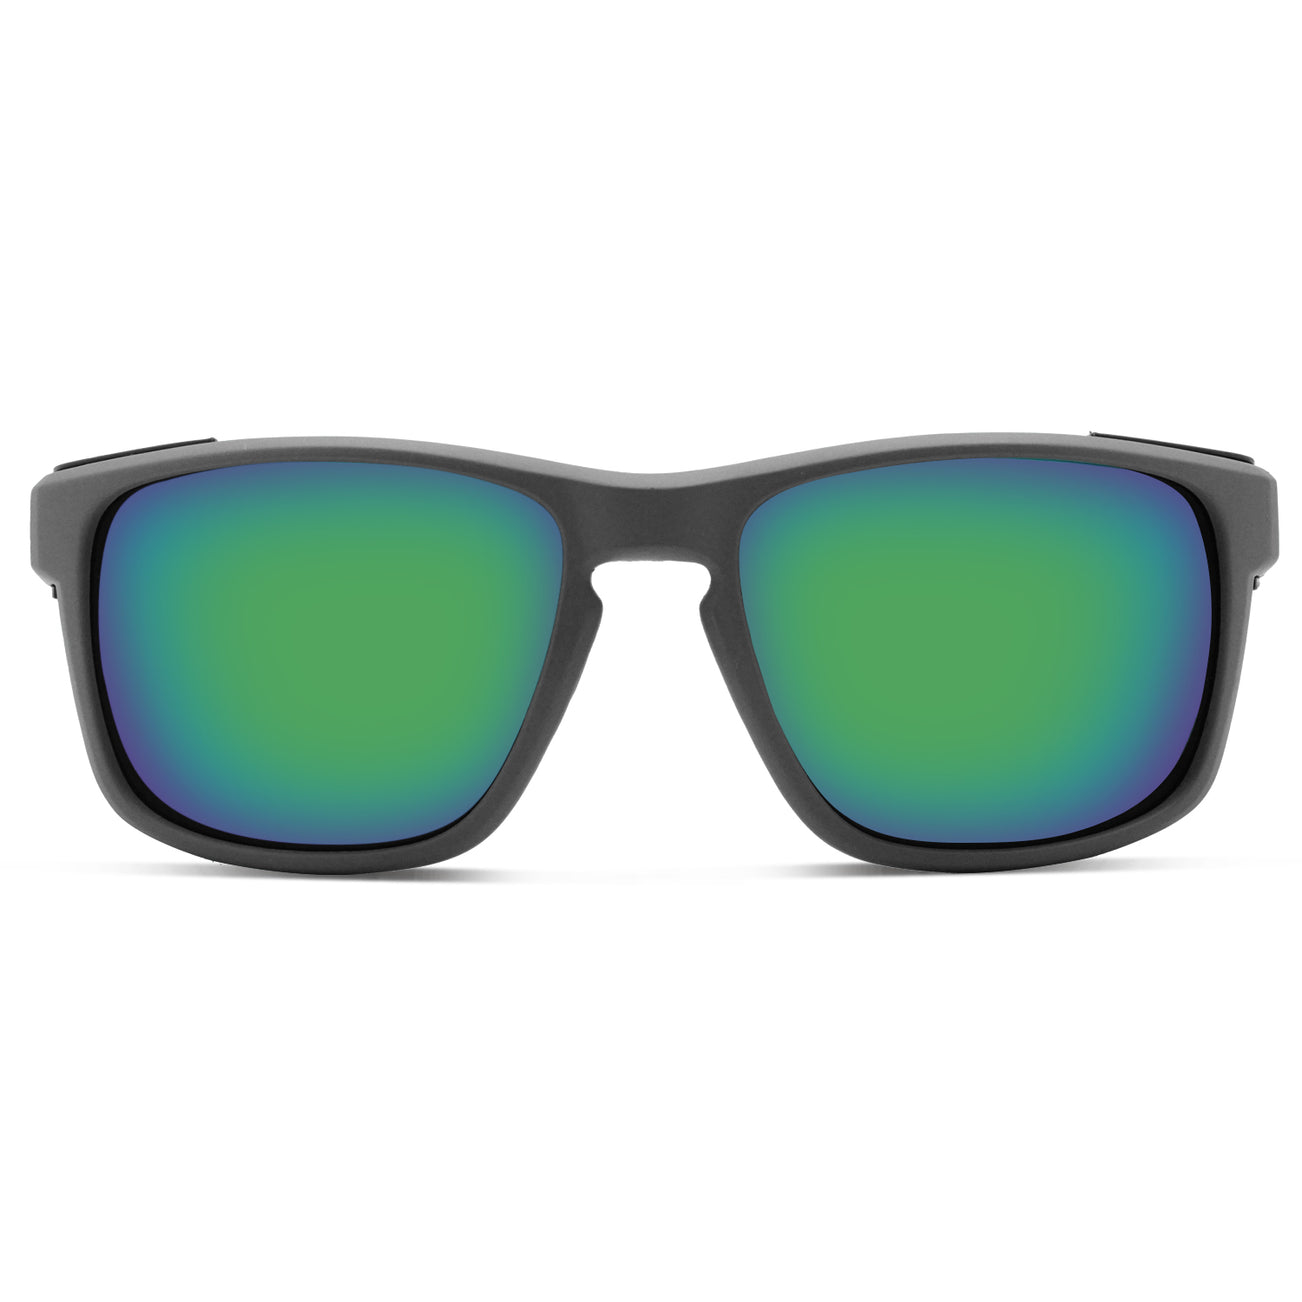 Peppers Sea Dweller Polarized Sunglasses grey greenmirror